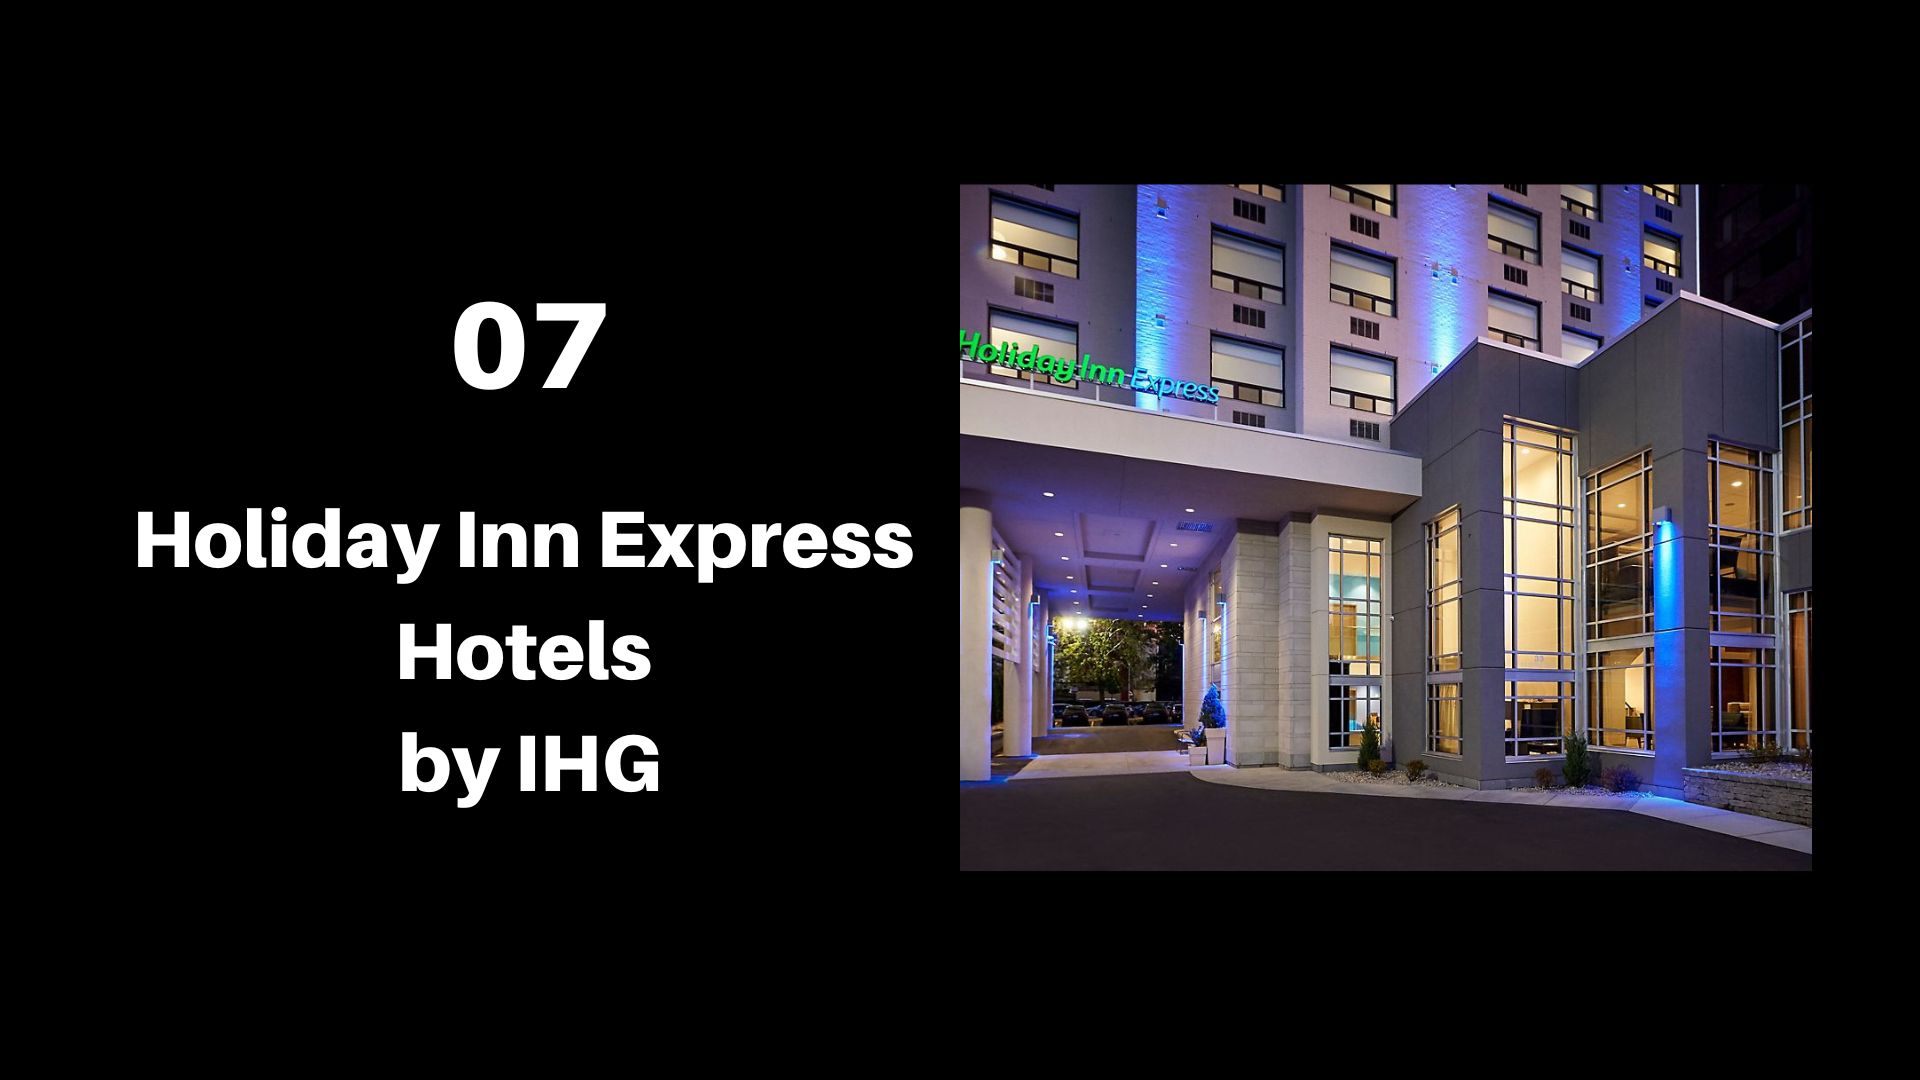 Holiday Inn Express Hotels by IHG